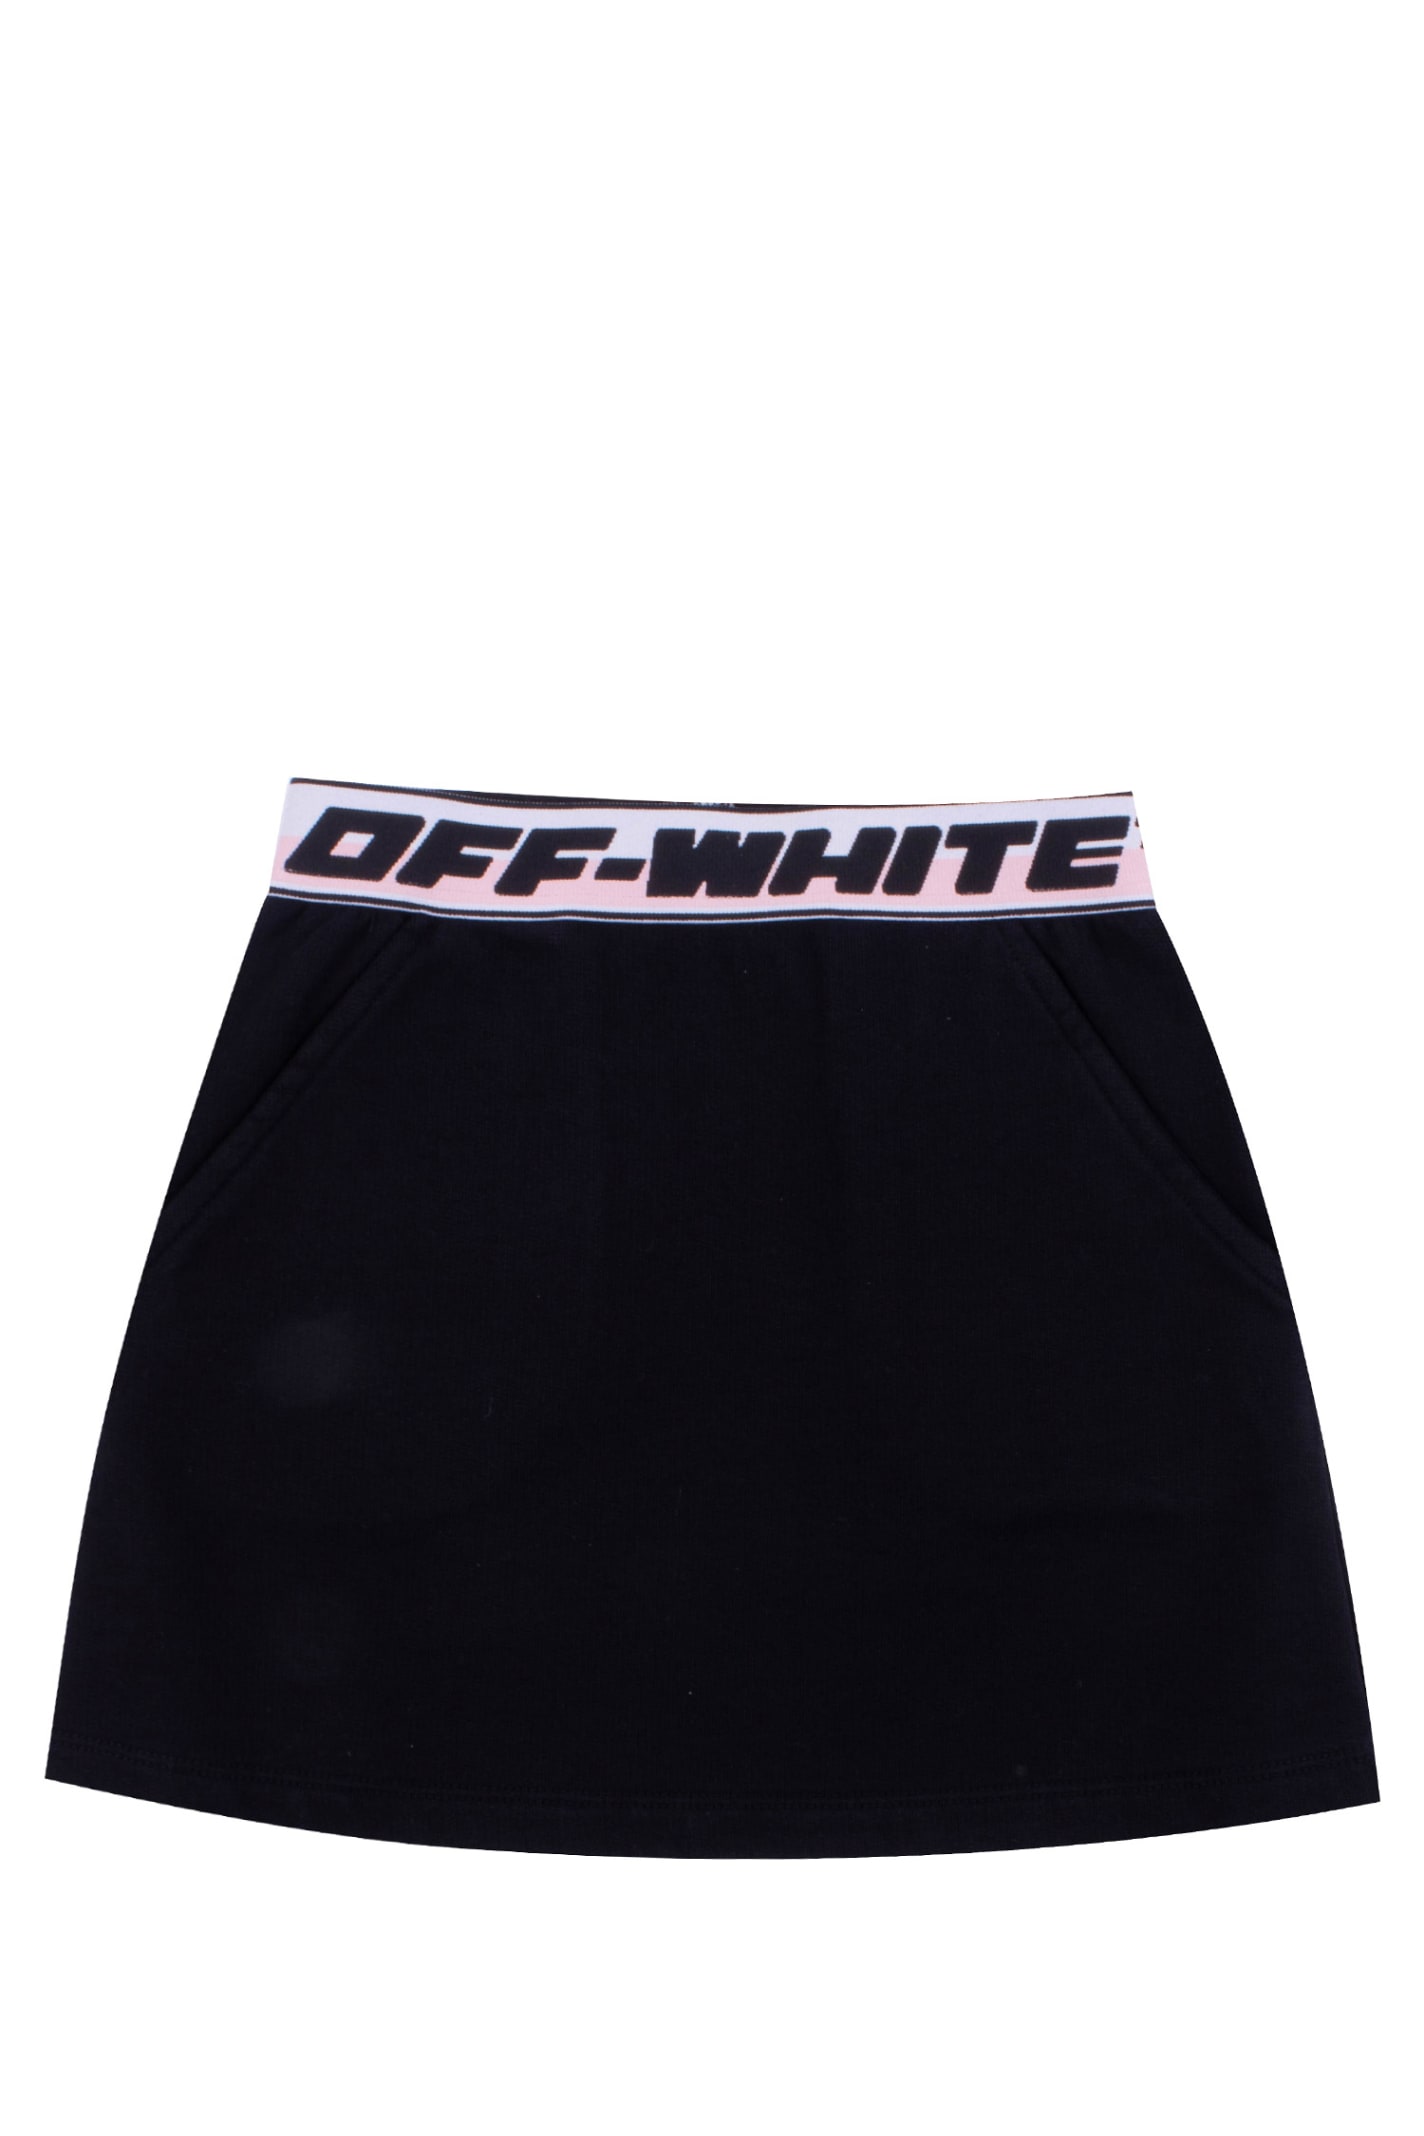 Off-White Cotton Skirt